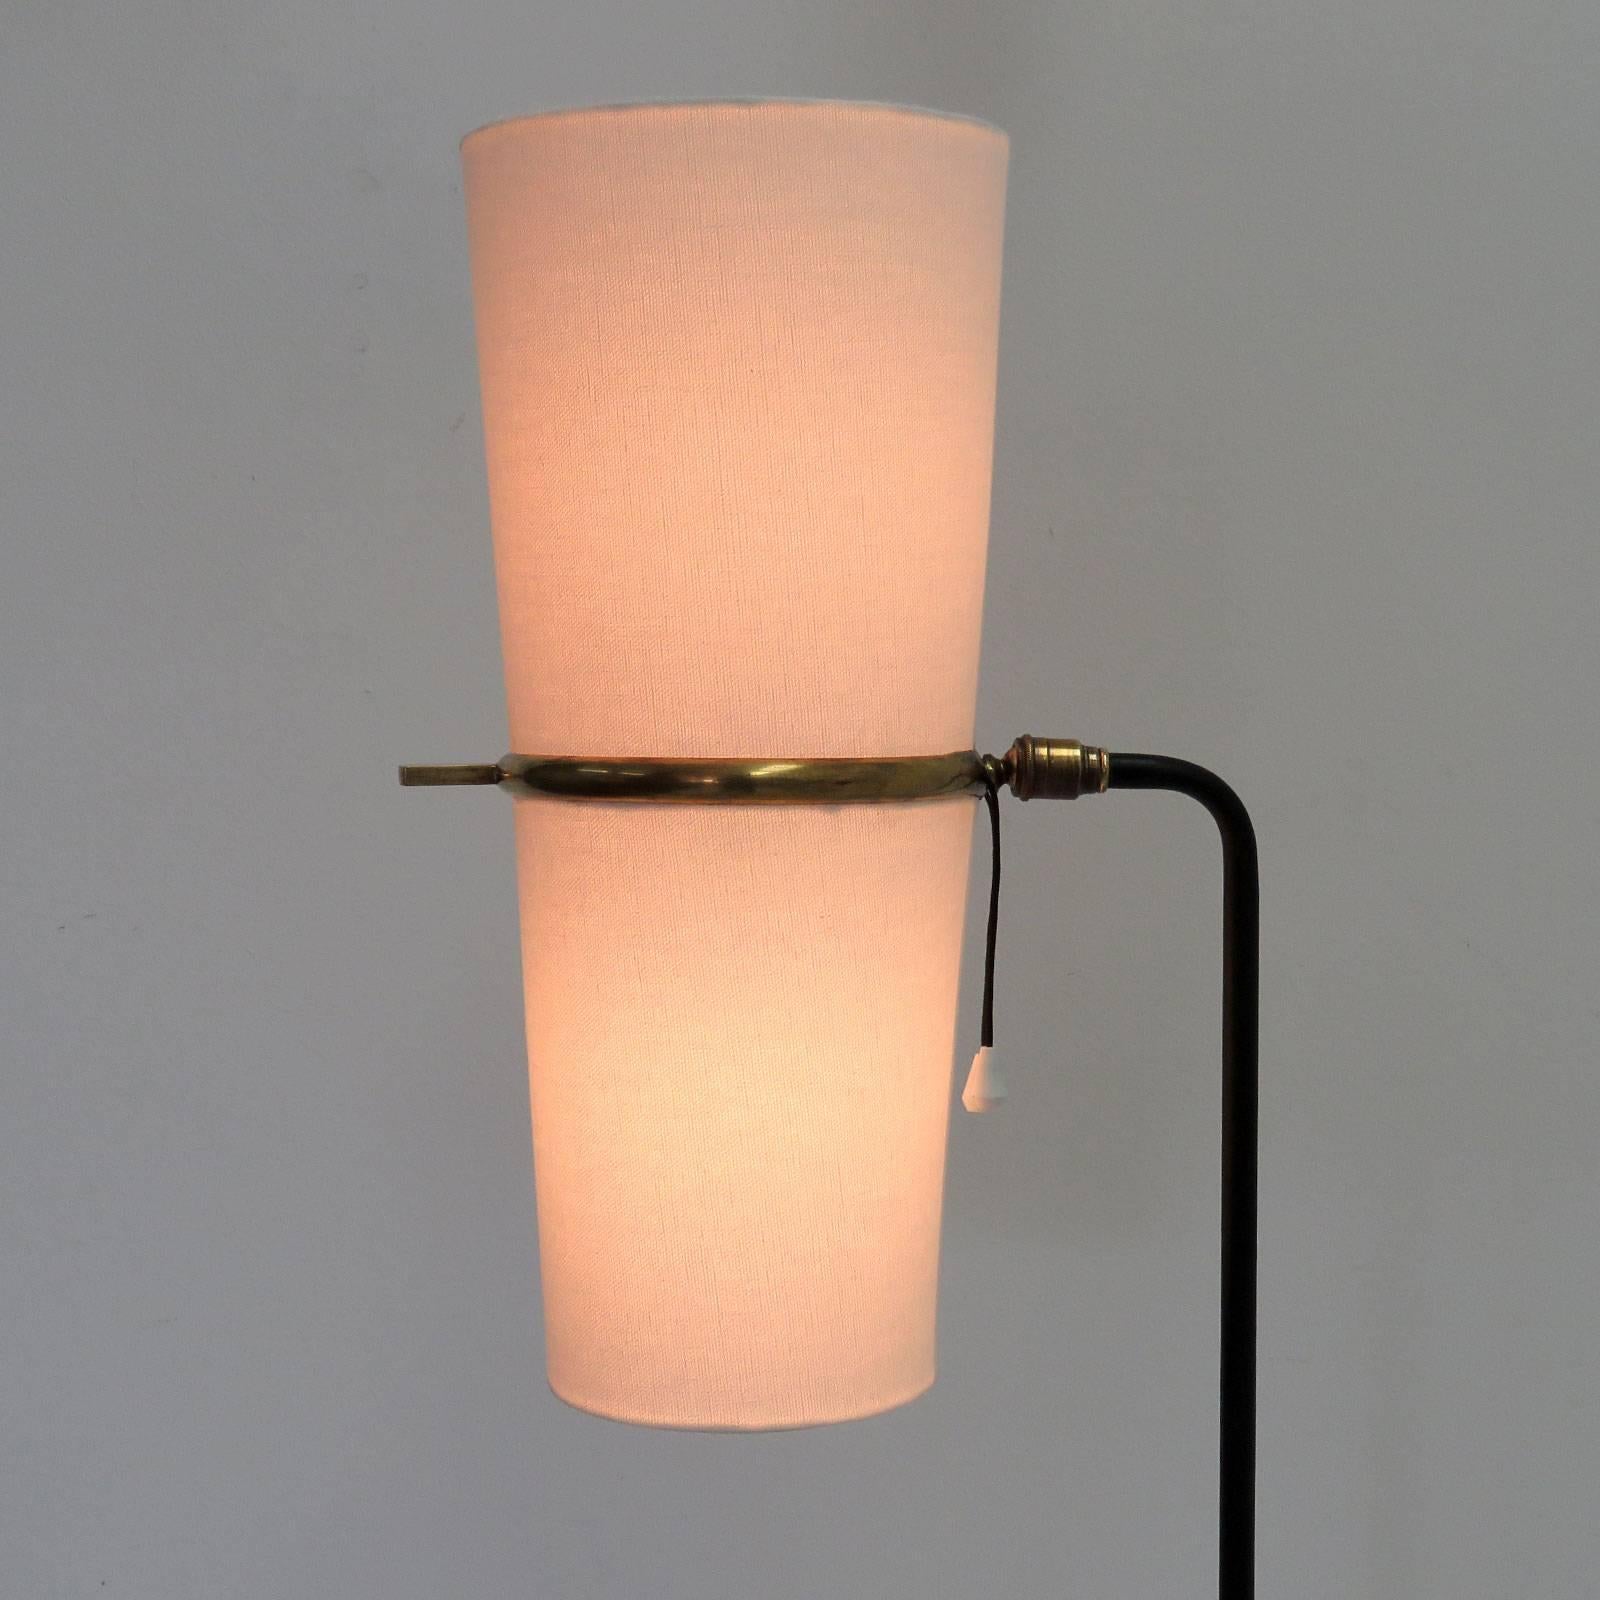 1950s Floor Lamp by Maison Lunel 1